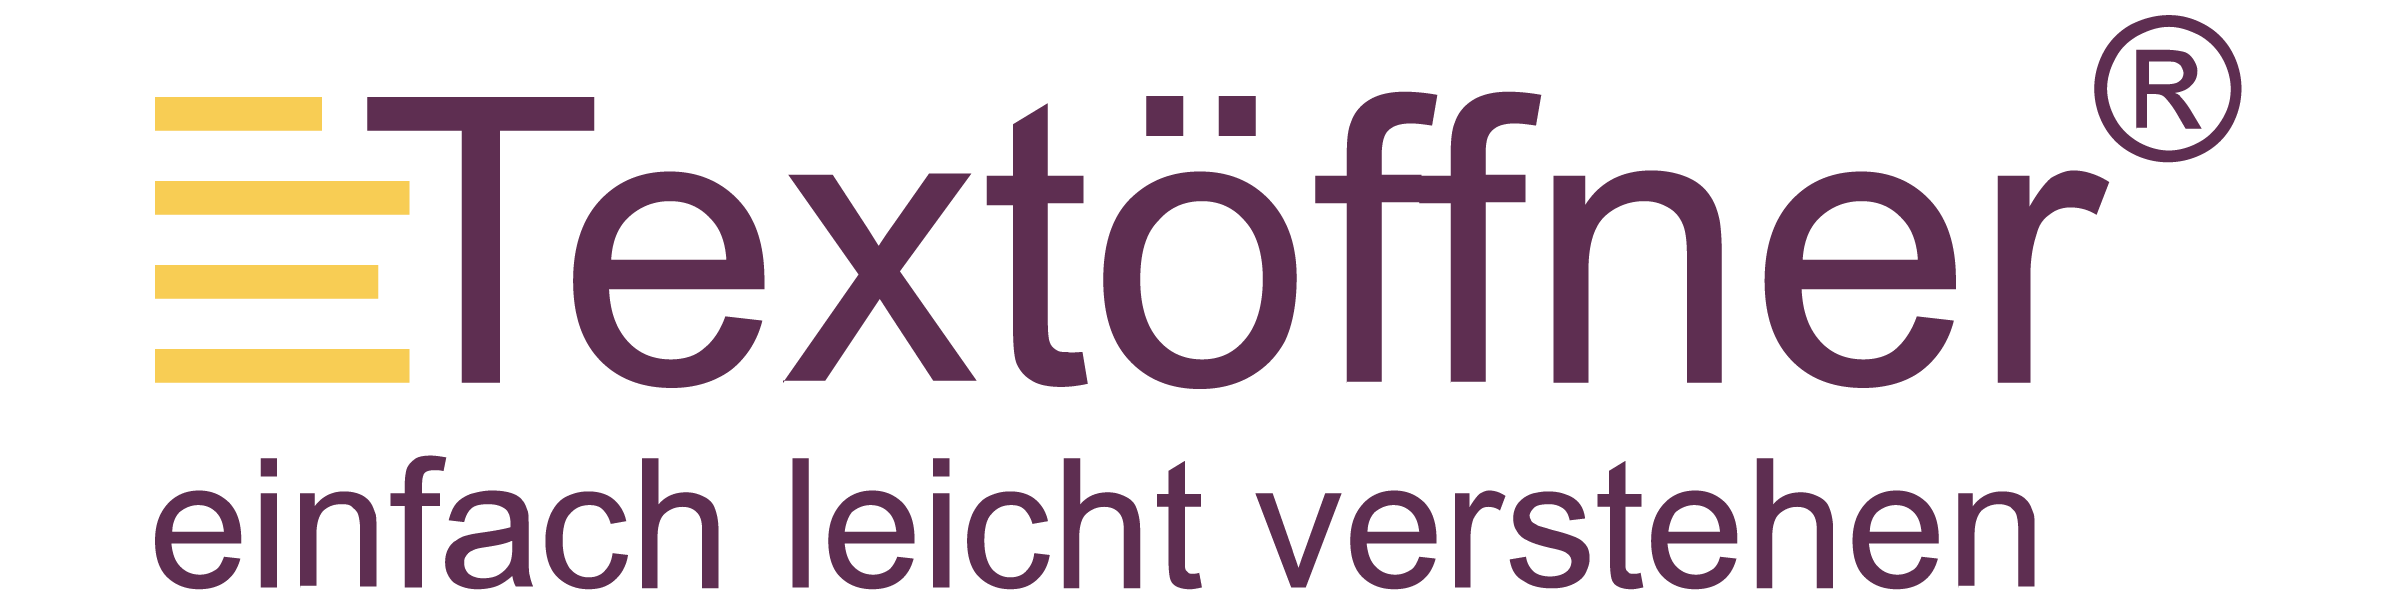 Logo-Textoeffner-druck-2